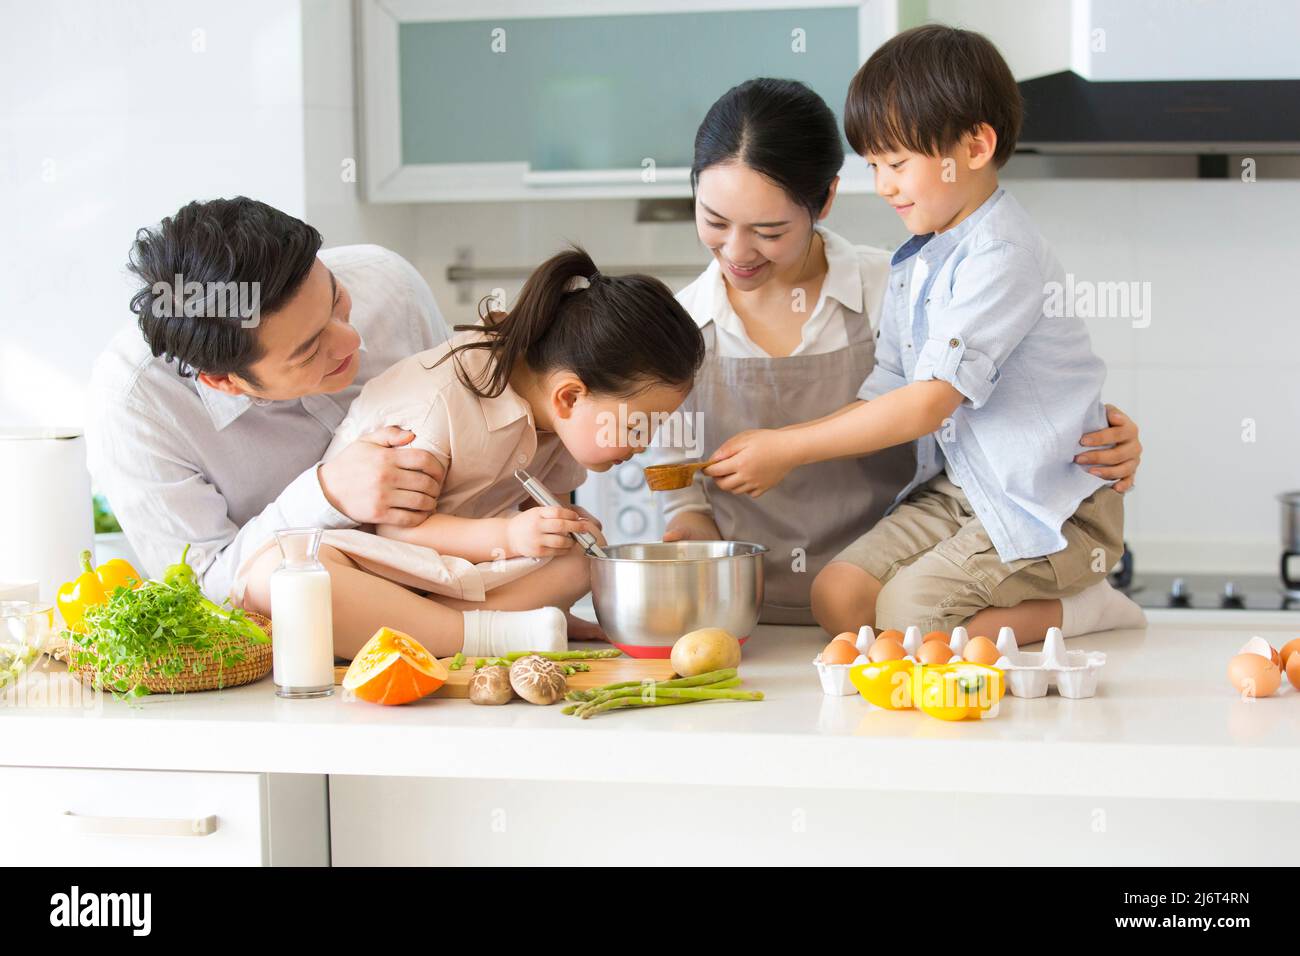 Famiglia cucina parentage. Una giovane famiglia di quattro cuochi pranzo insieme in cucina. - foto di scorta Foto Stock